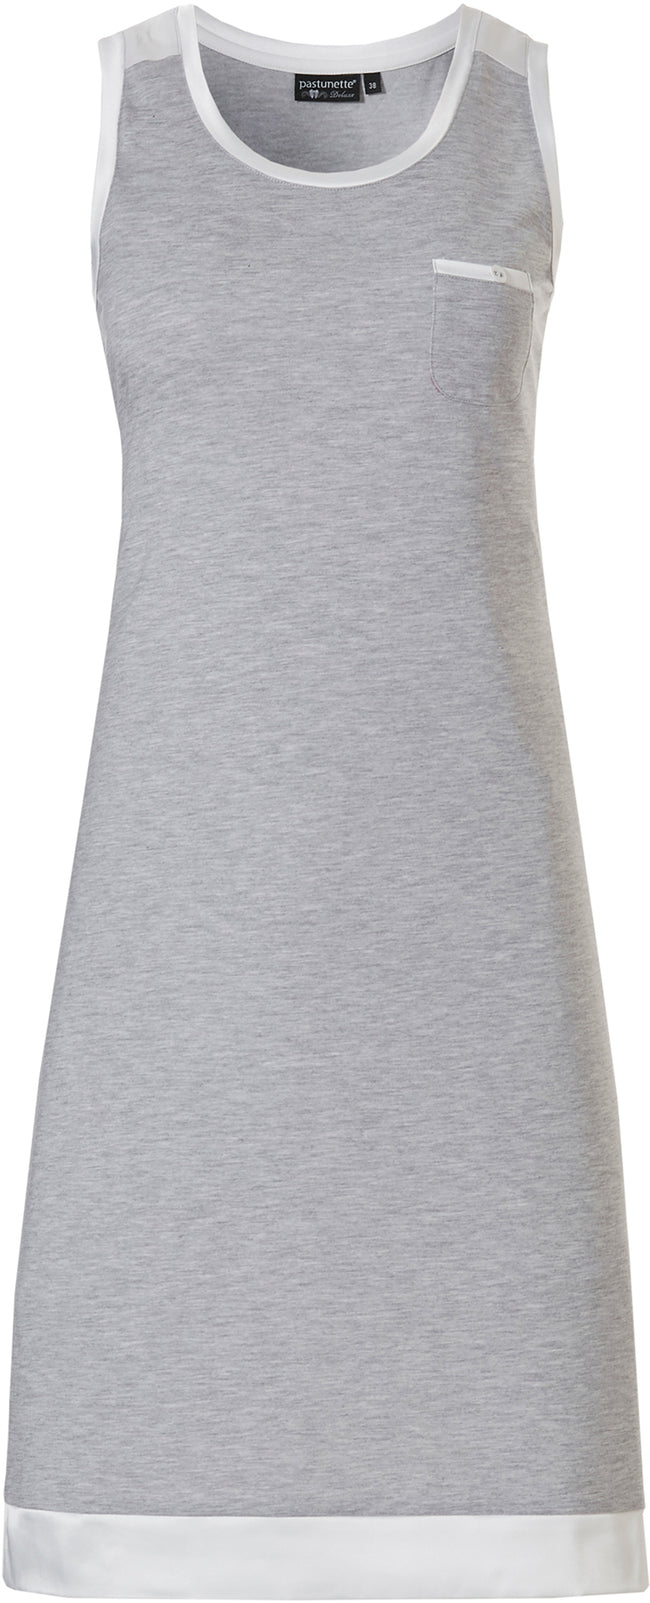 15211-320-1 Pastunette Mouwloos Nachthemd lengte 95 cm